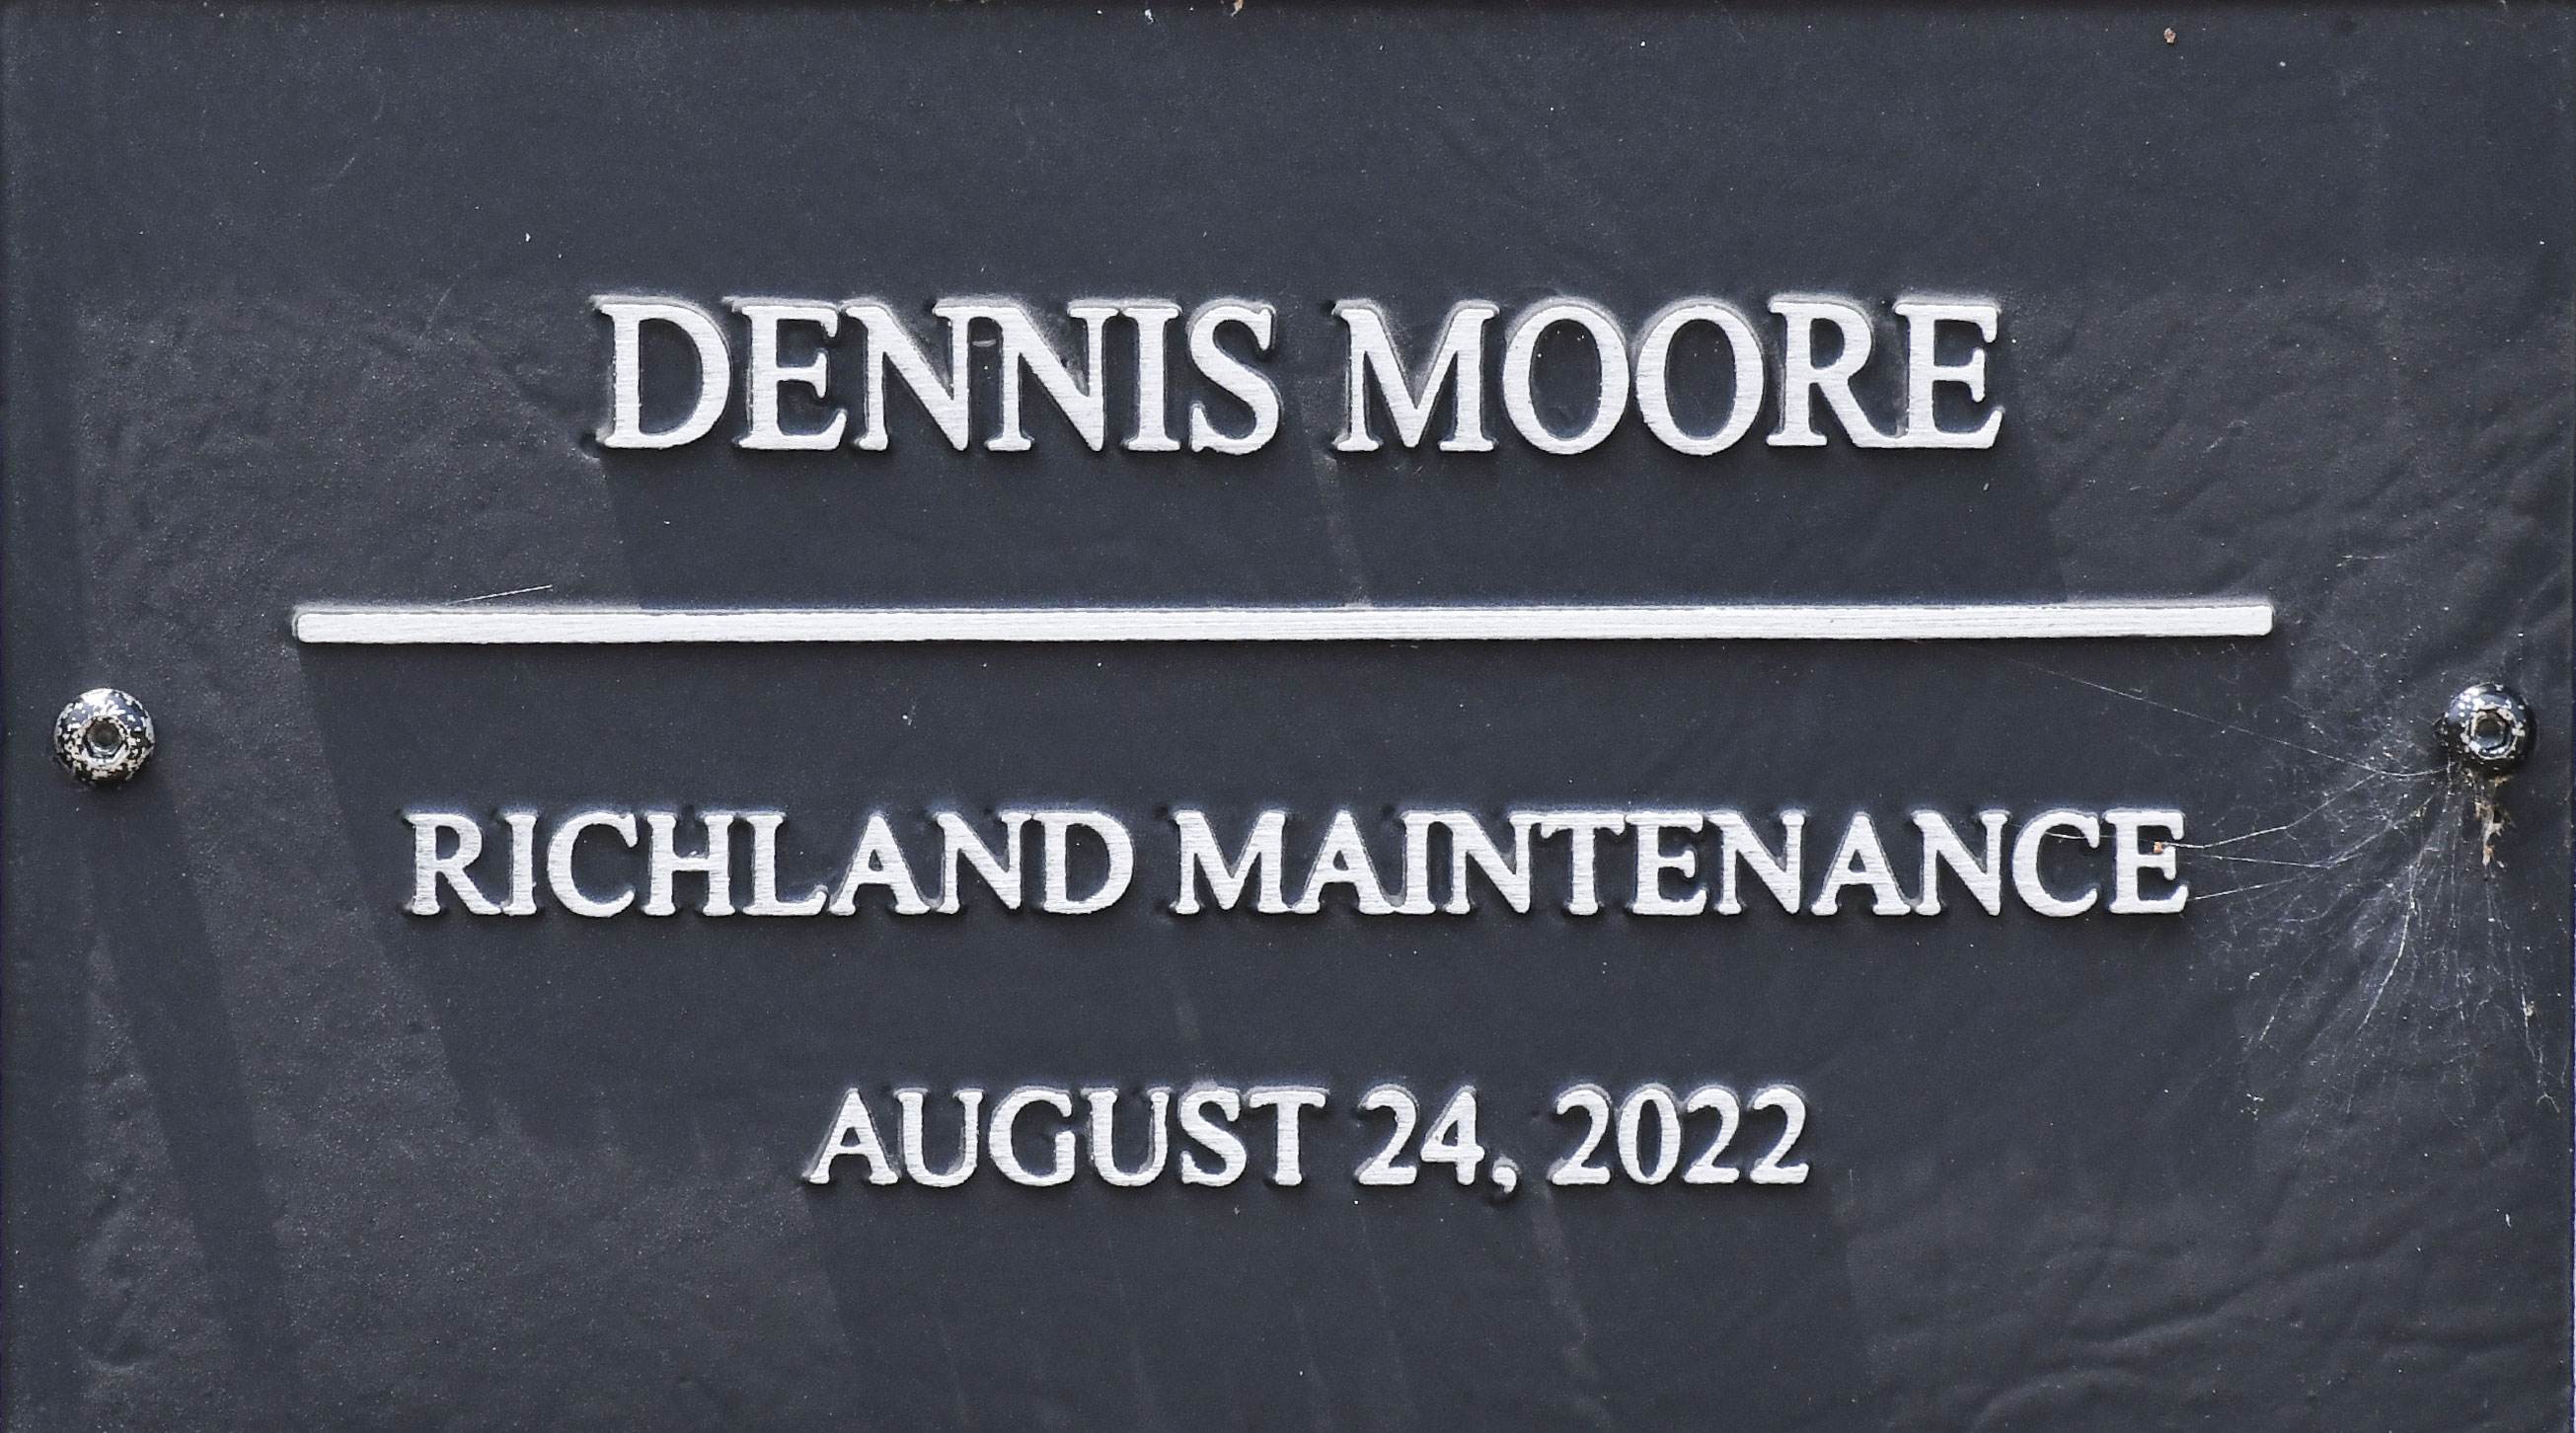 SCDOT Worker Dennis Moore - Richland Maintenance - August 24, 2022